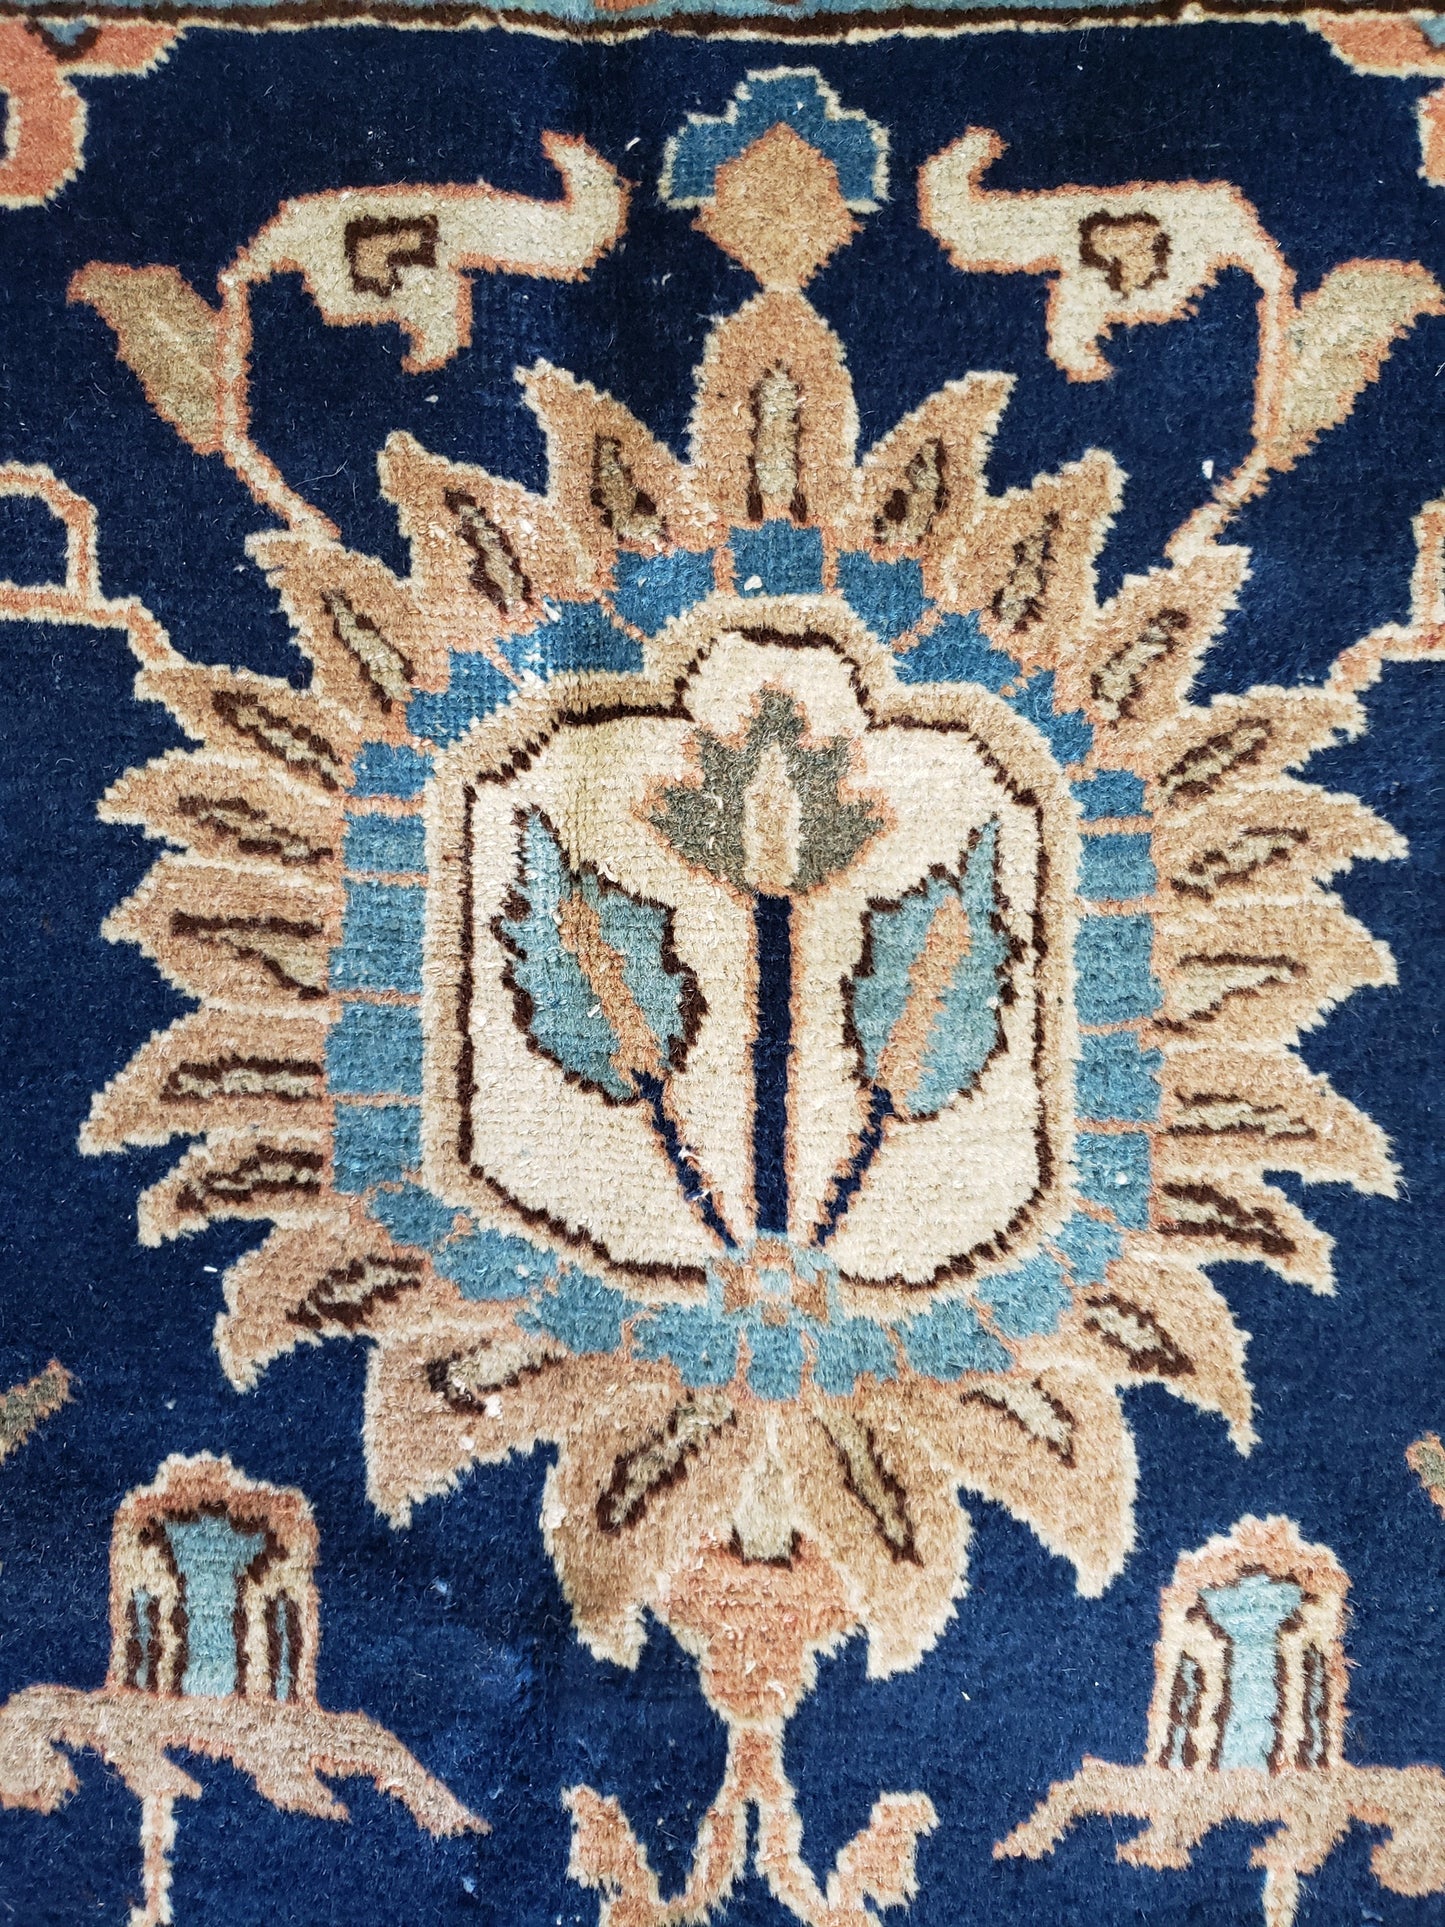 SOLD - Antique Persian Rug, 9x12, 1940's Khoy Tabriz, - "Dreamy Garden"